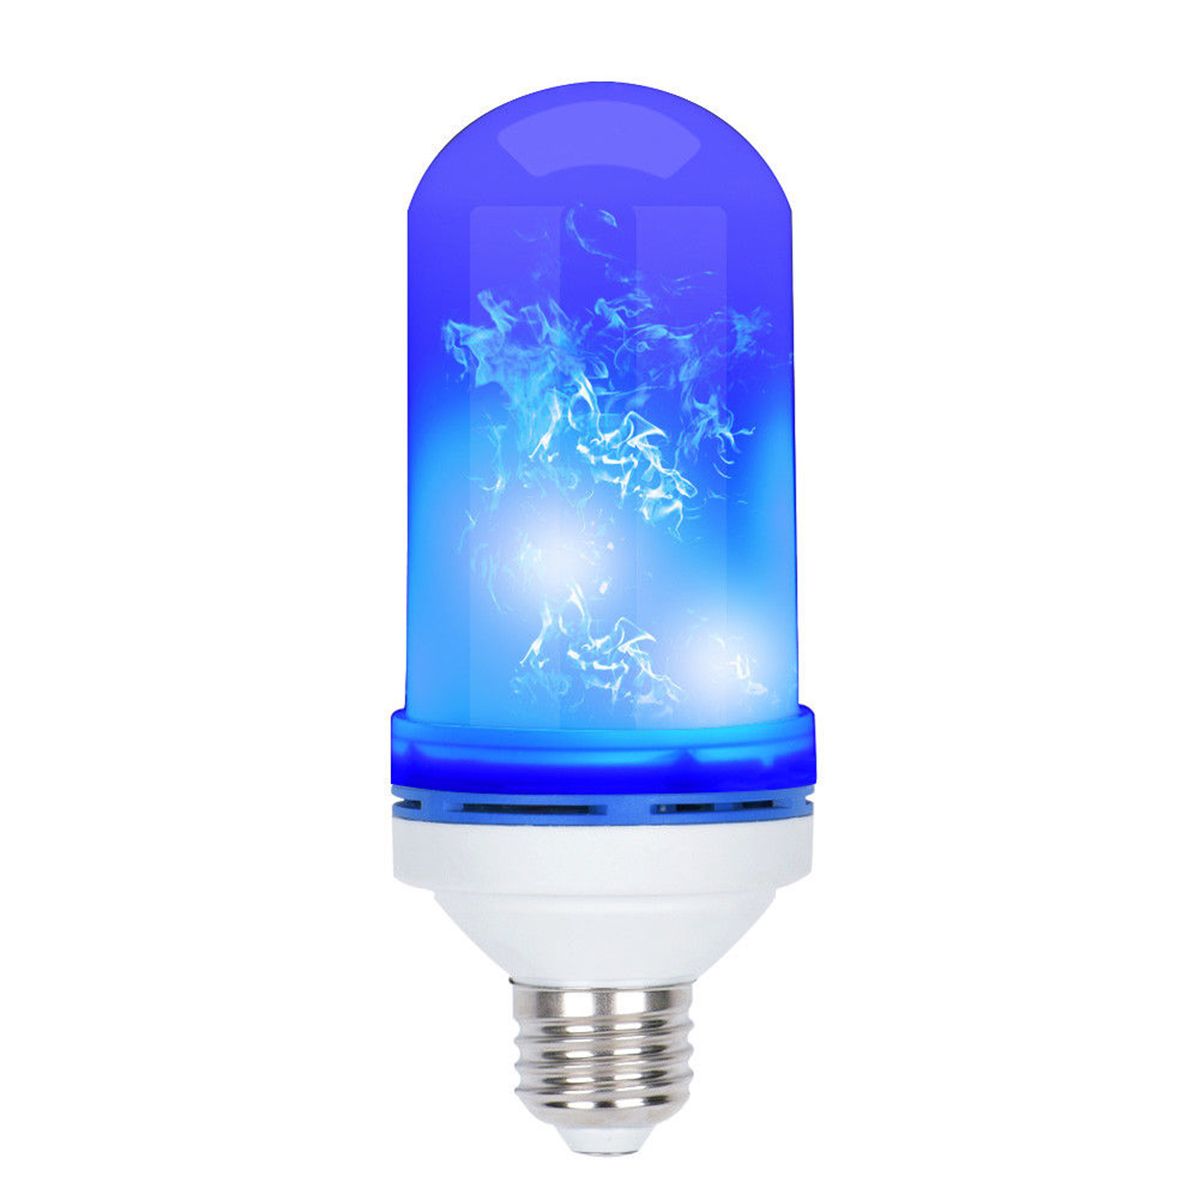 AC85-265V-4-Modes-E27-Blue-LED-Flicker-Flame-Light-Bulb-Simulated-Burning-Fire-Effect-Festival-Lamp-1383807